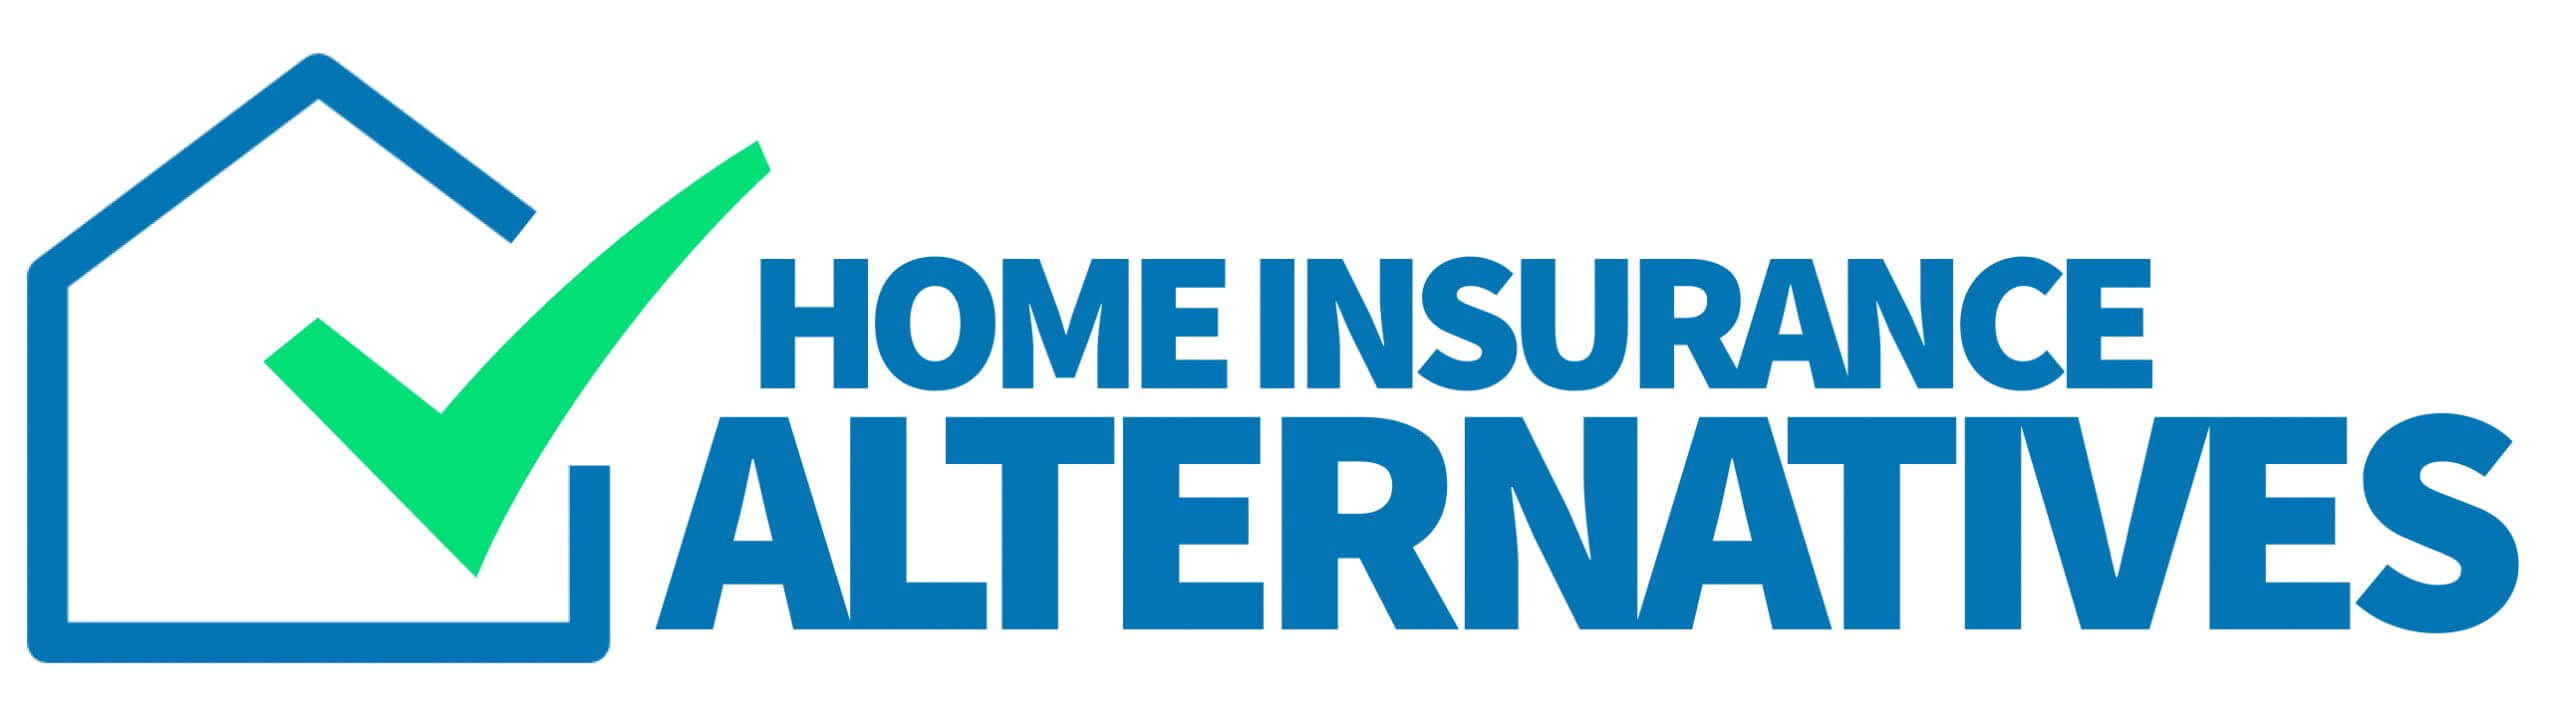 Home Insurance Alternatives